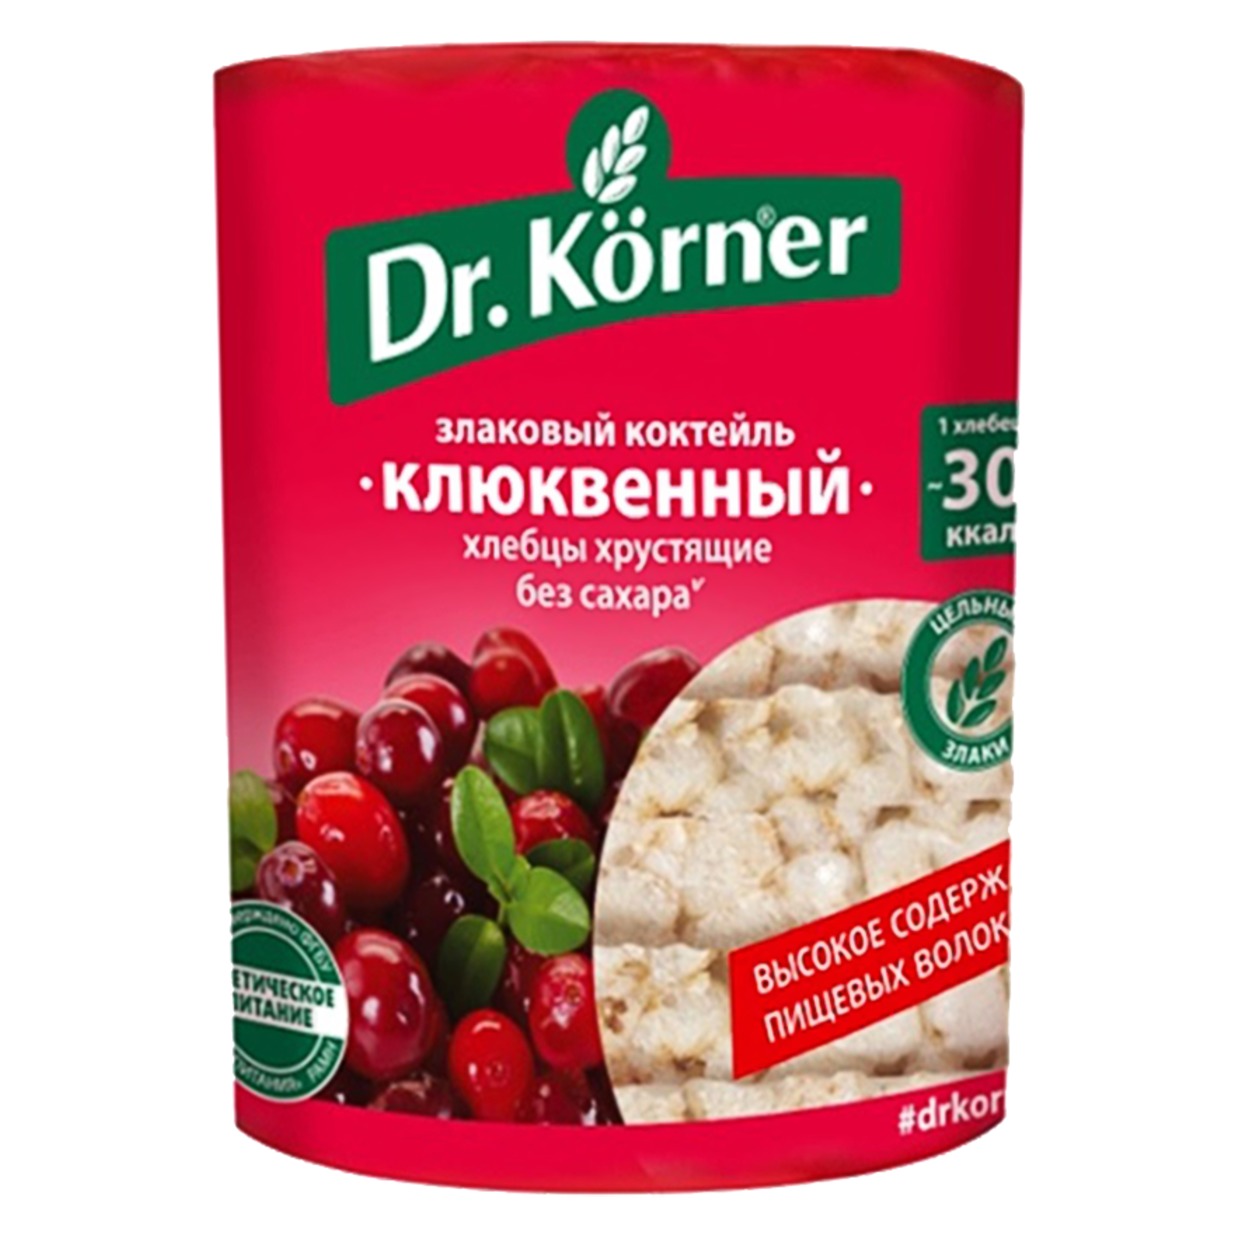 Хлебцы Злаковый коктейль, Dr.Korner, 100 г